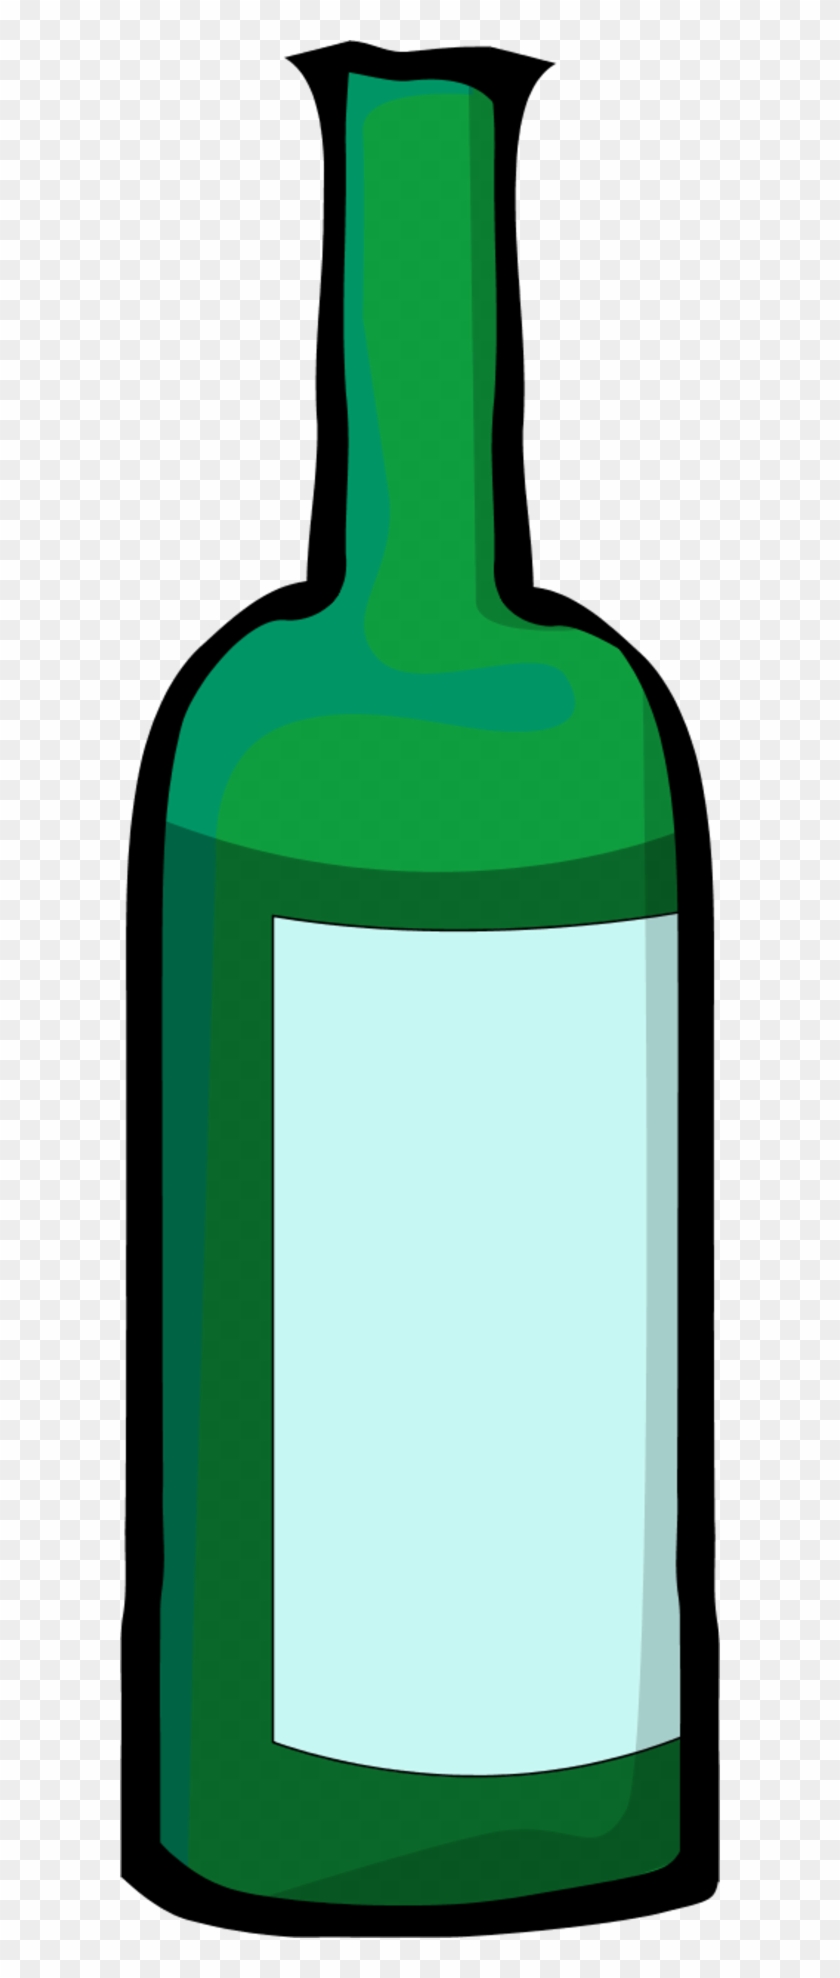 Bottle Clipart Green Bottle - Wine Bottle Clip Art #391220